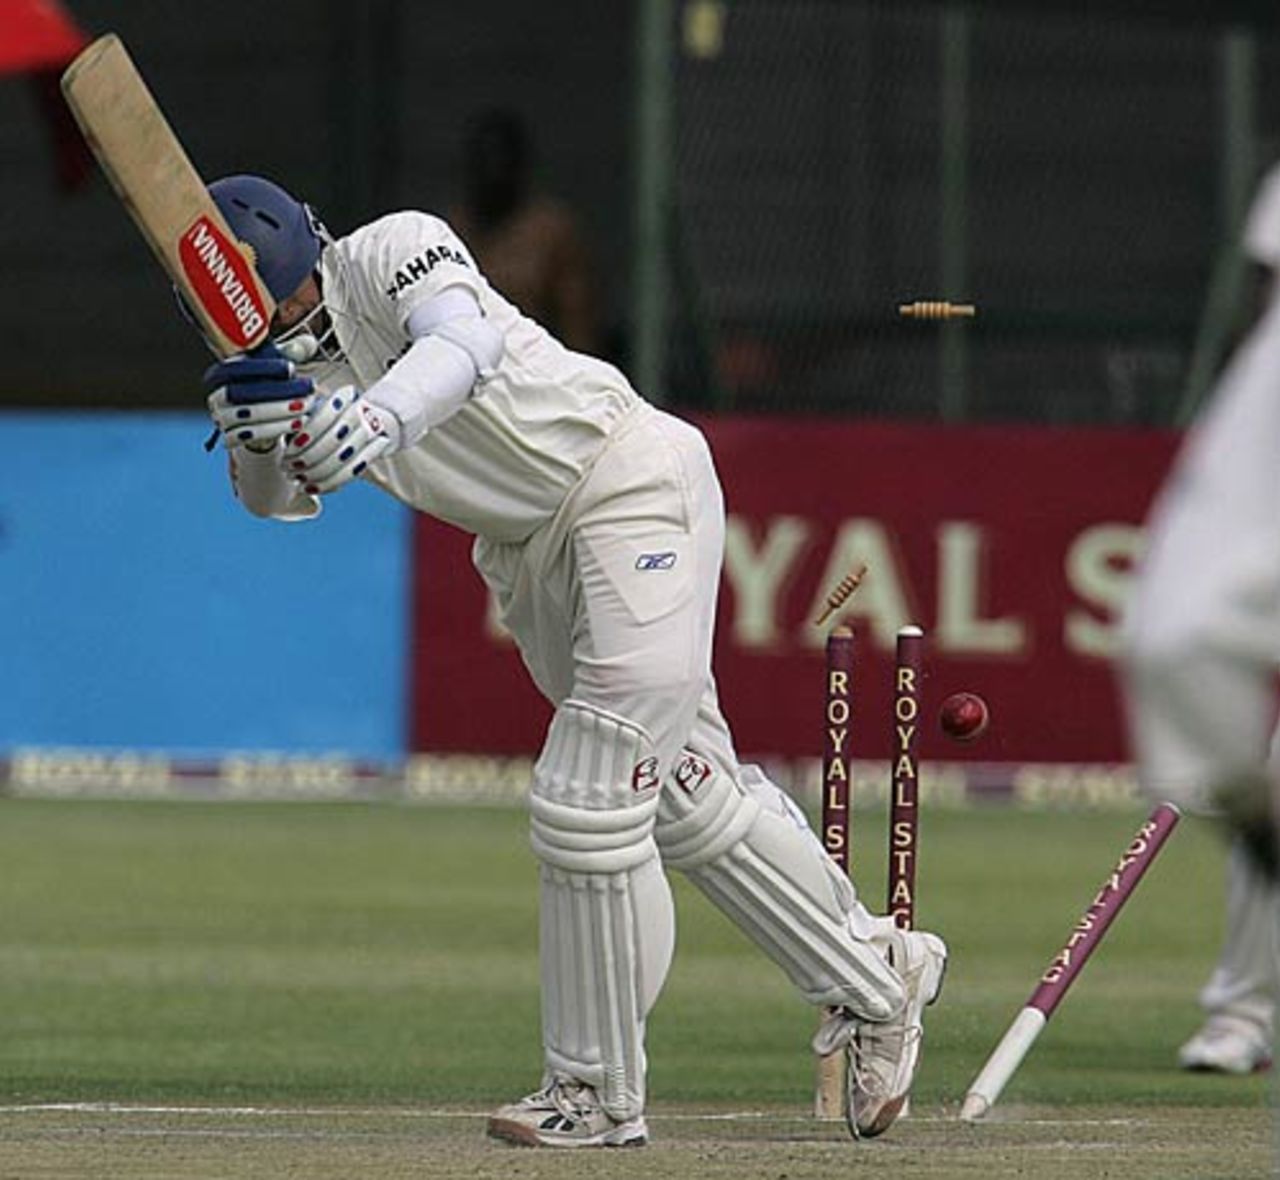 Rahul Dravid is bowled for 98, Zimbabwe v India, 2nd Test, Harare, September 21, 2005